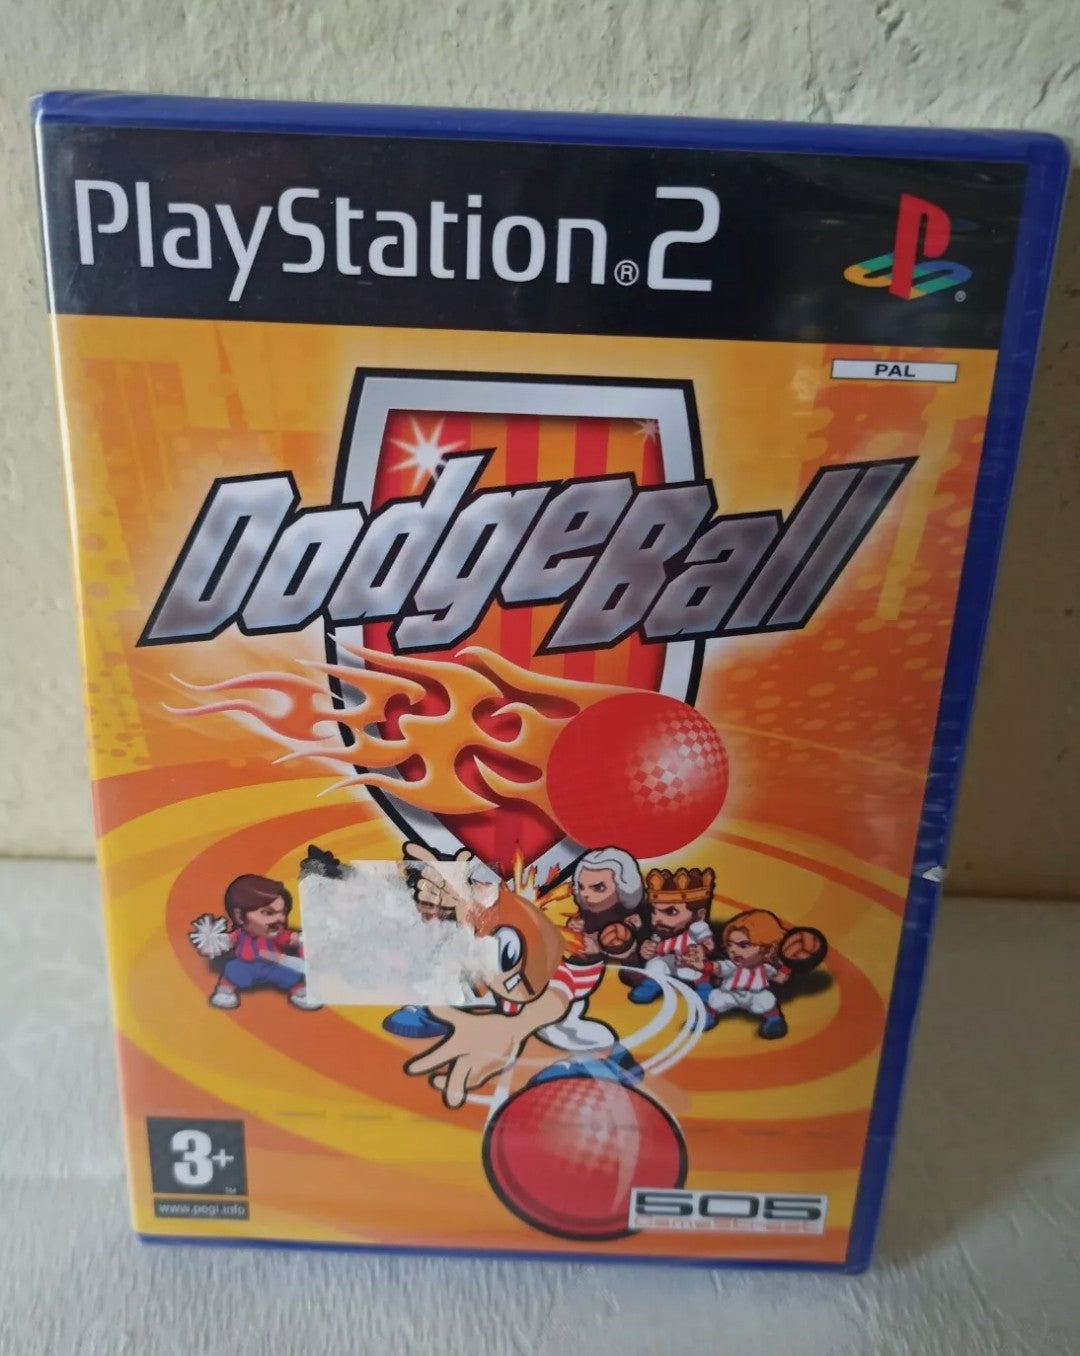 Dodgeball video game for PlayStation 2